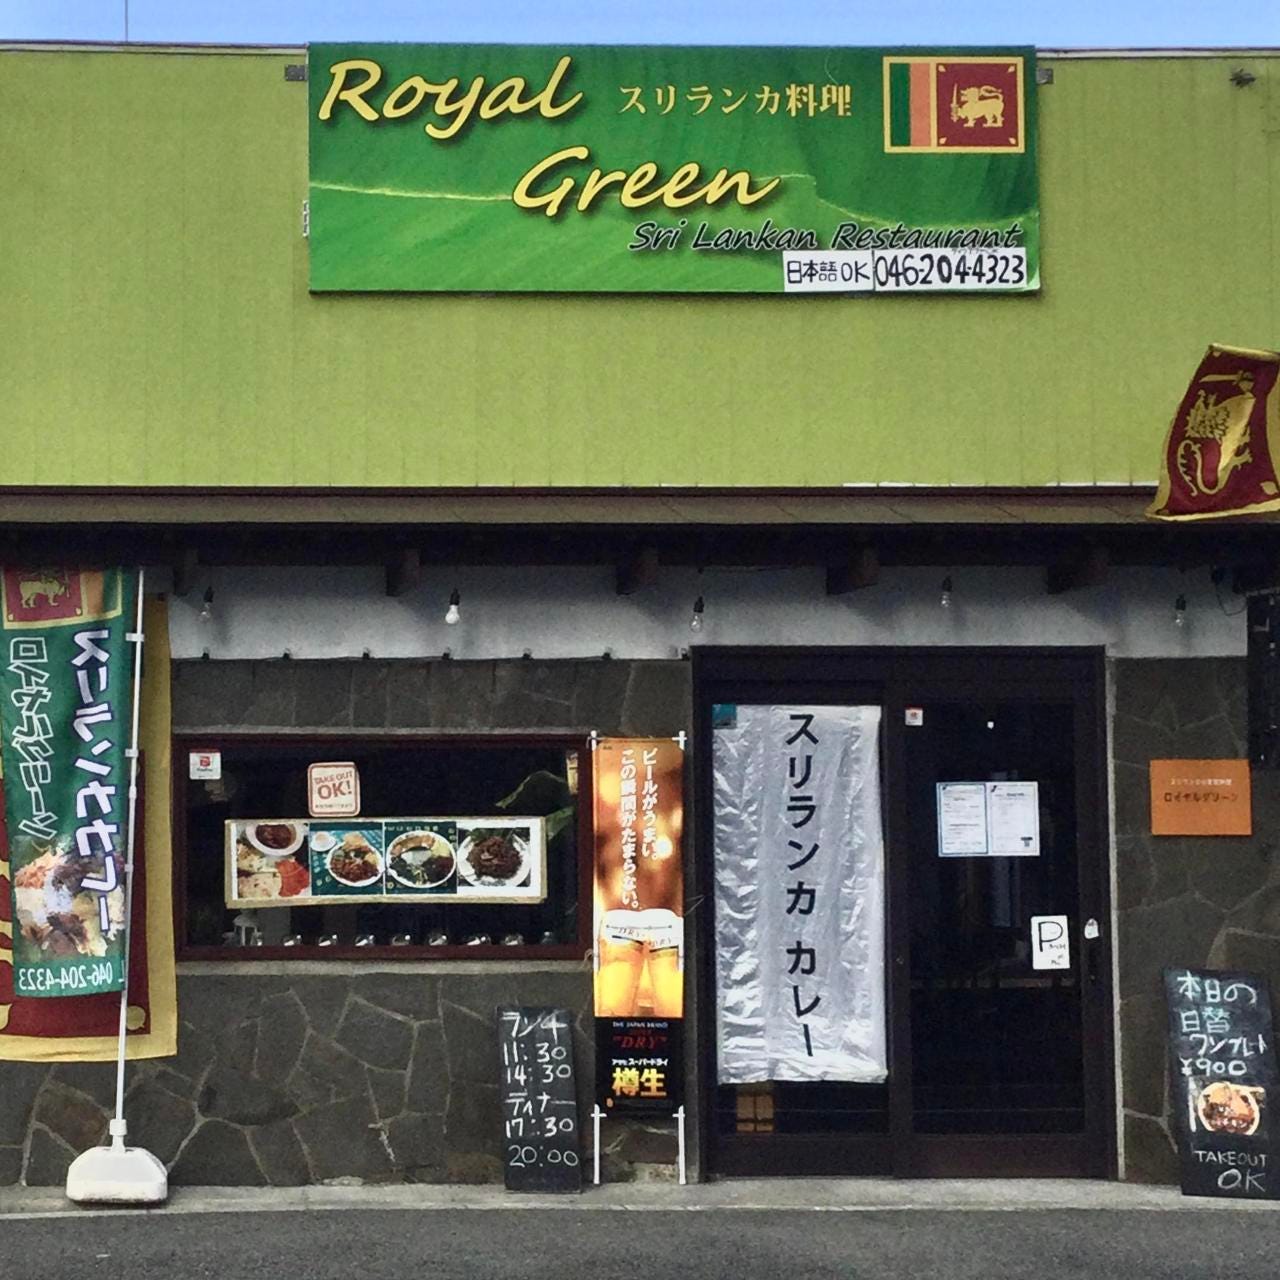 Royal Green Restaurant & Bar image